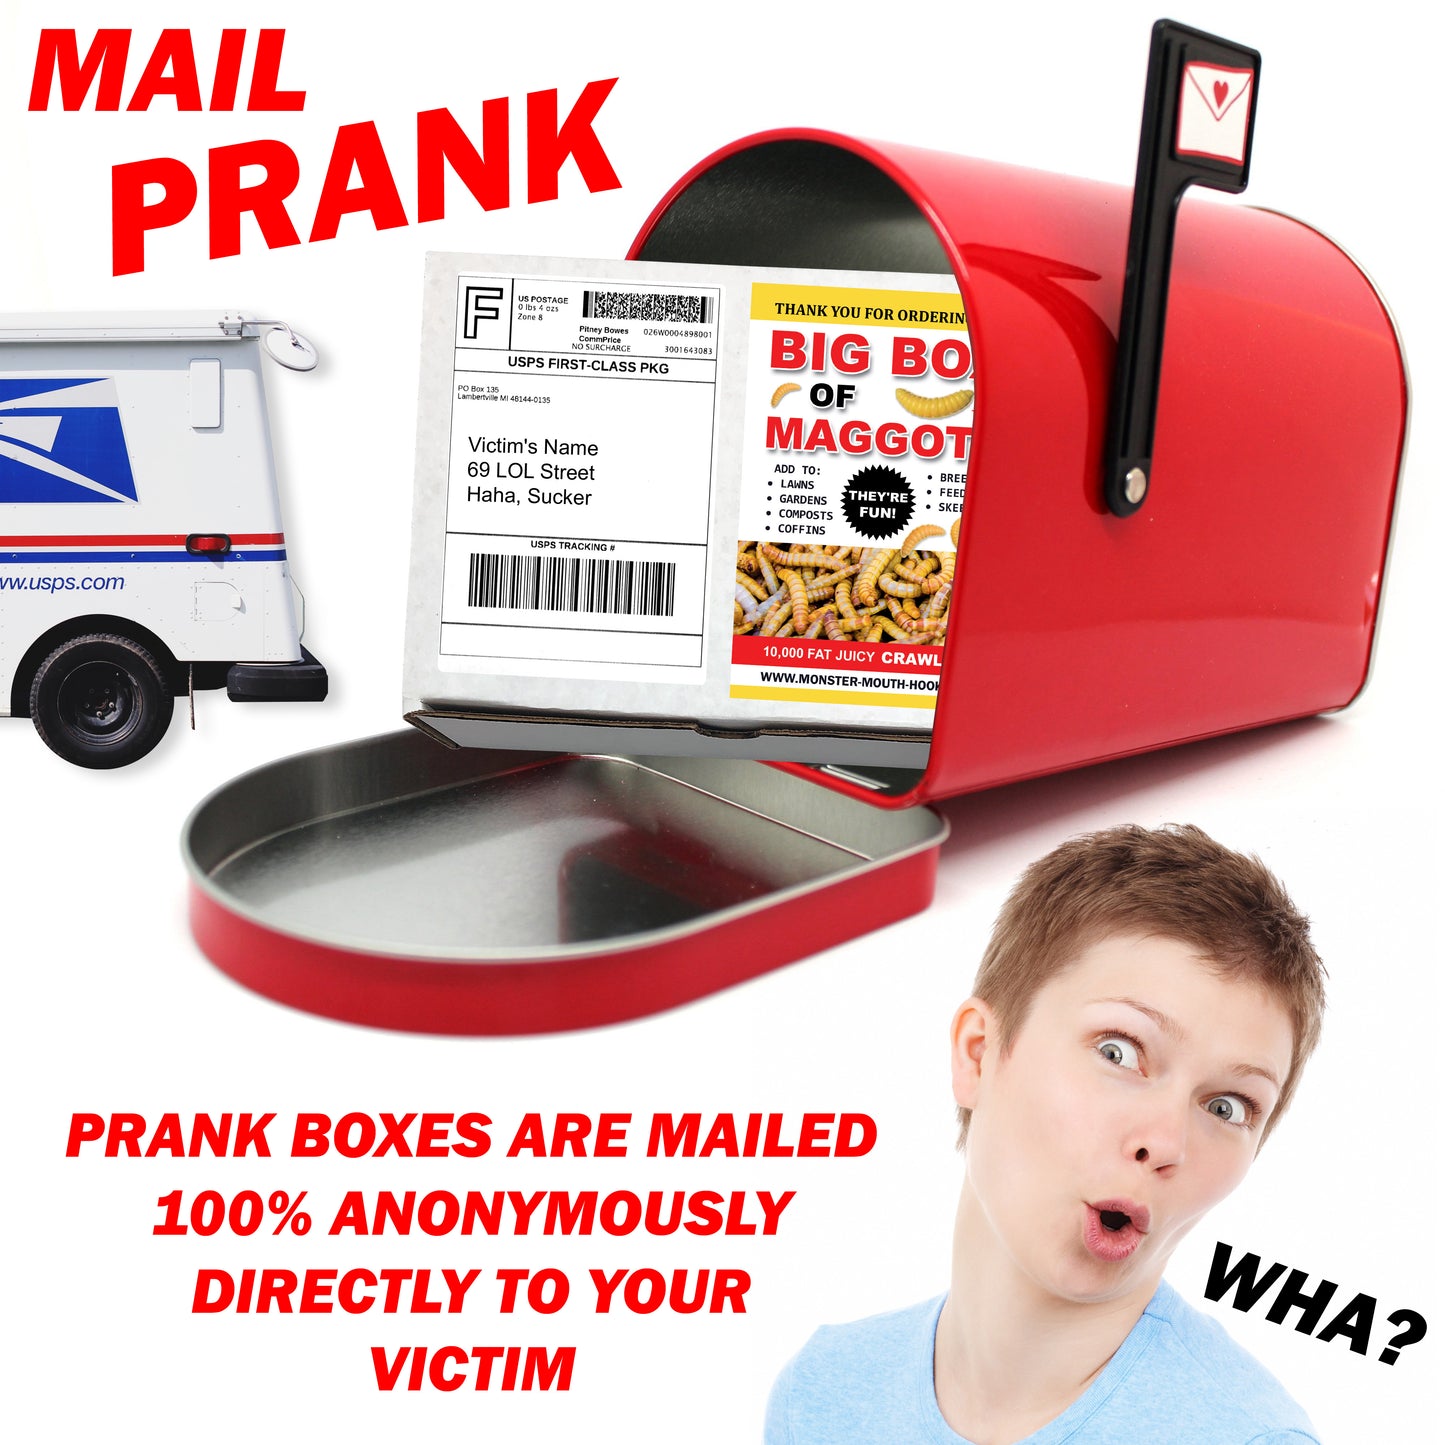 Big Box of Maggots Prank Mailer Gift